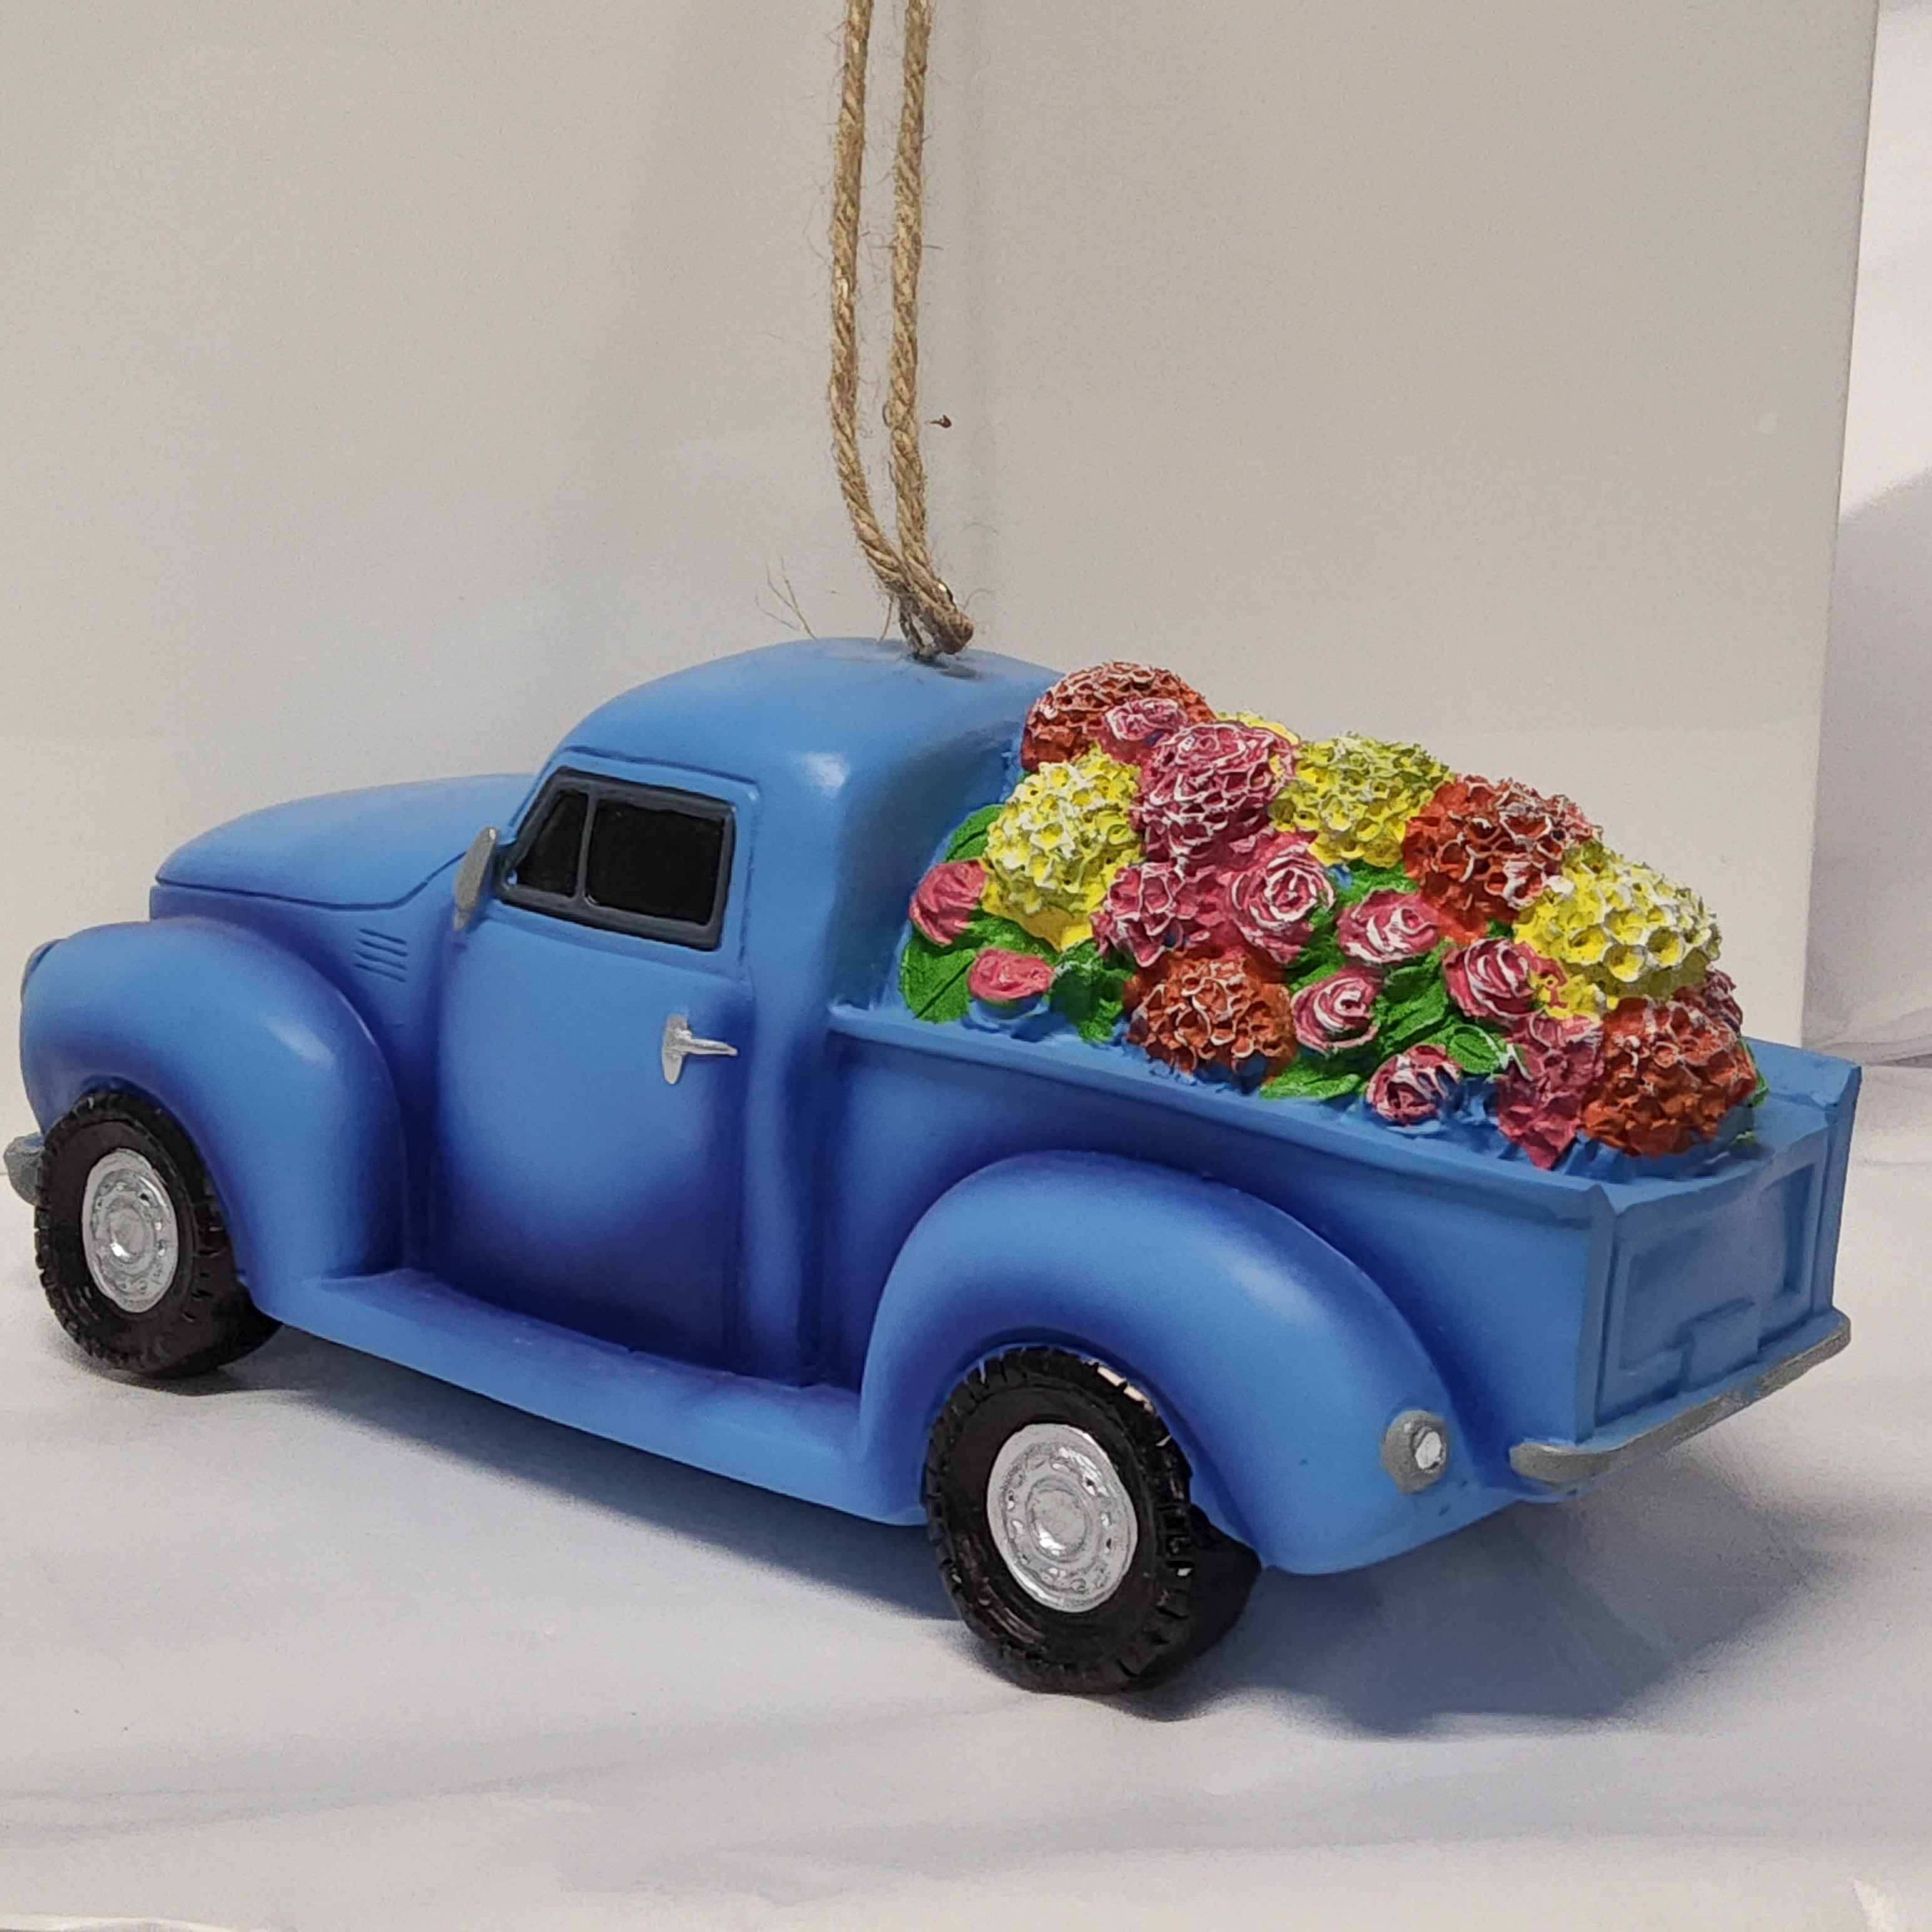 Birdhouse - Decorative - Truck + Flowers 10128